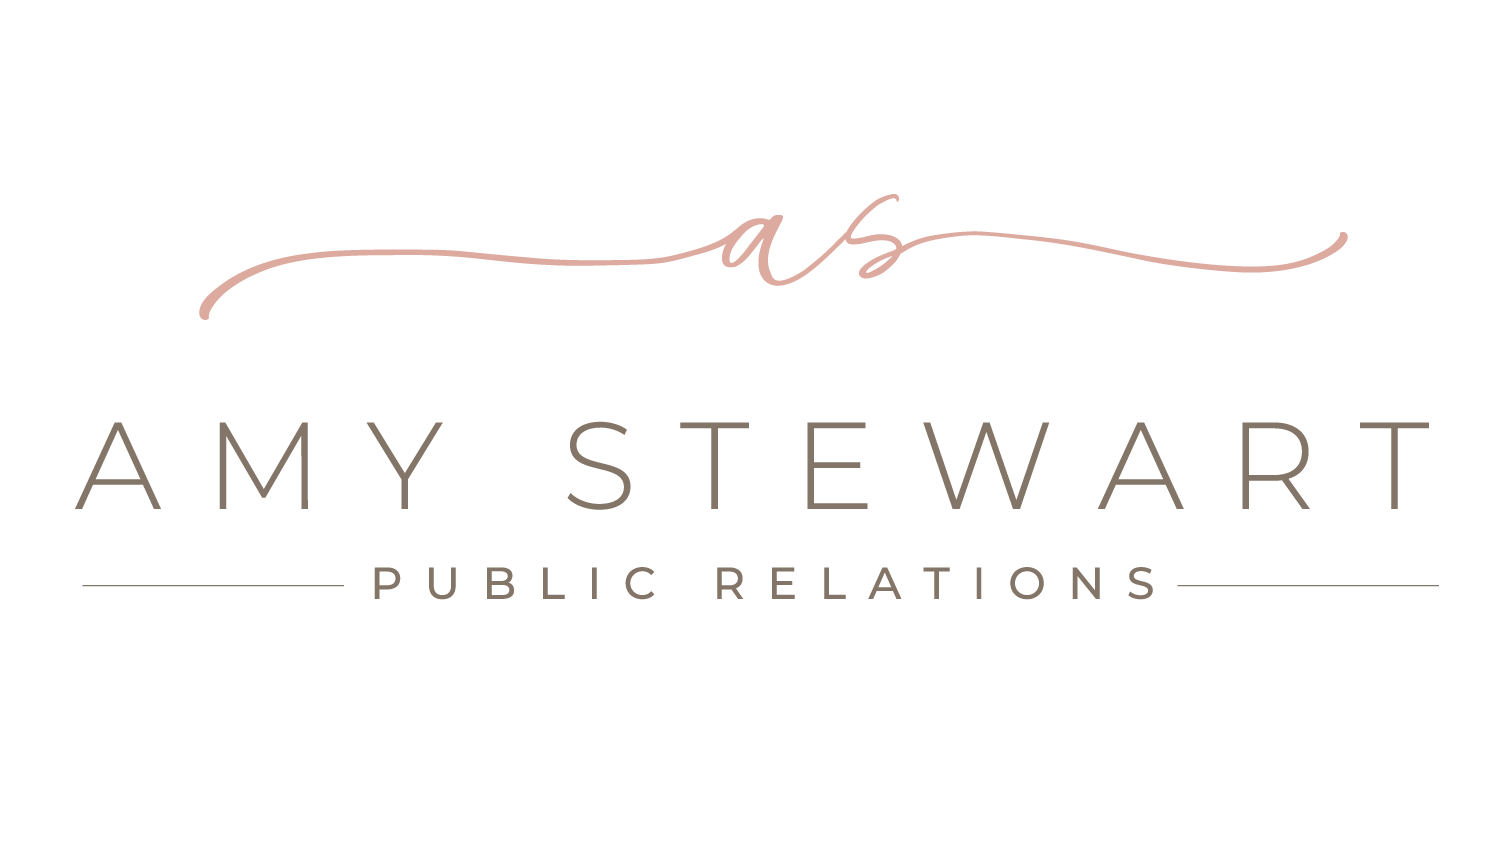 Amy Stewart Public Relations